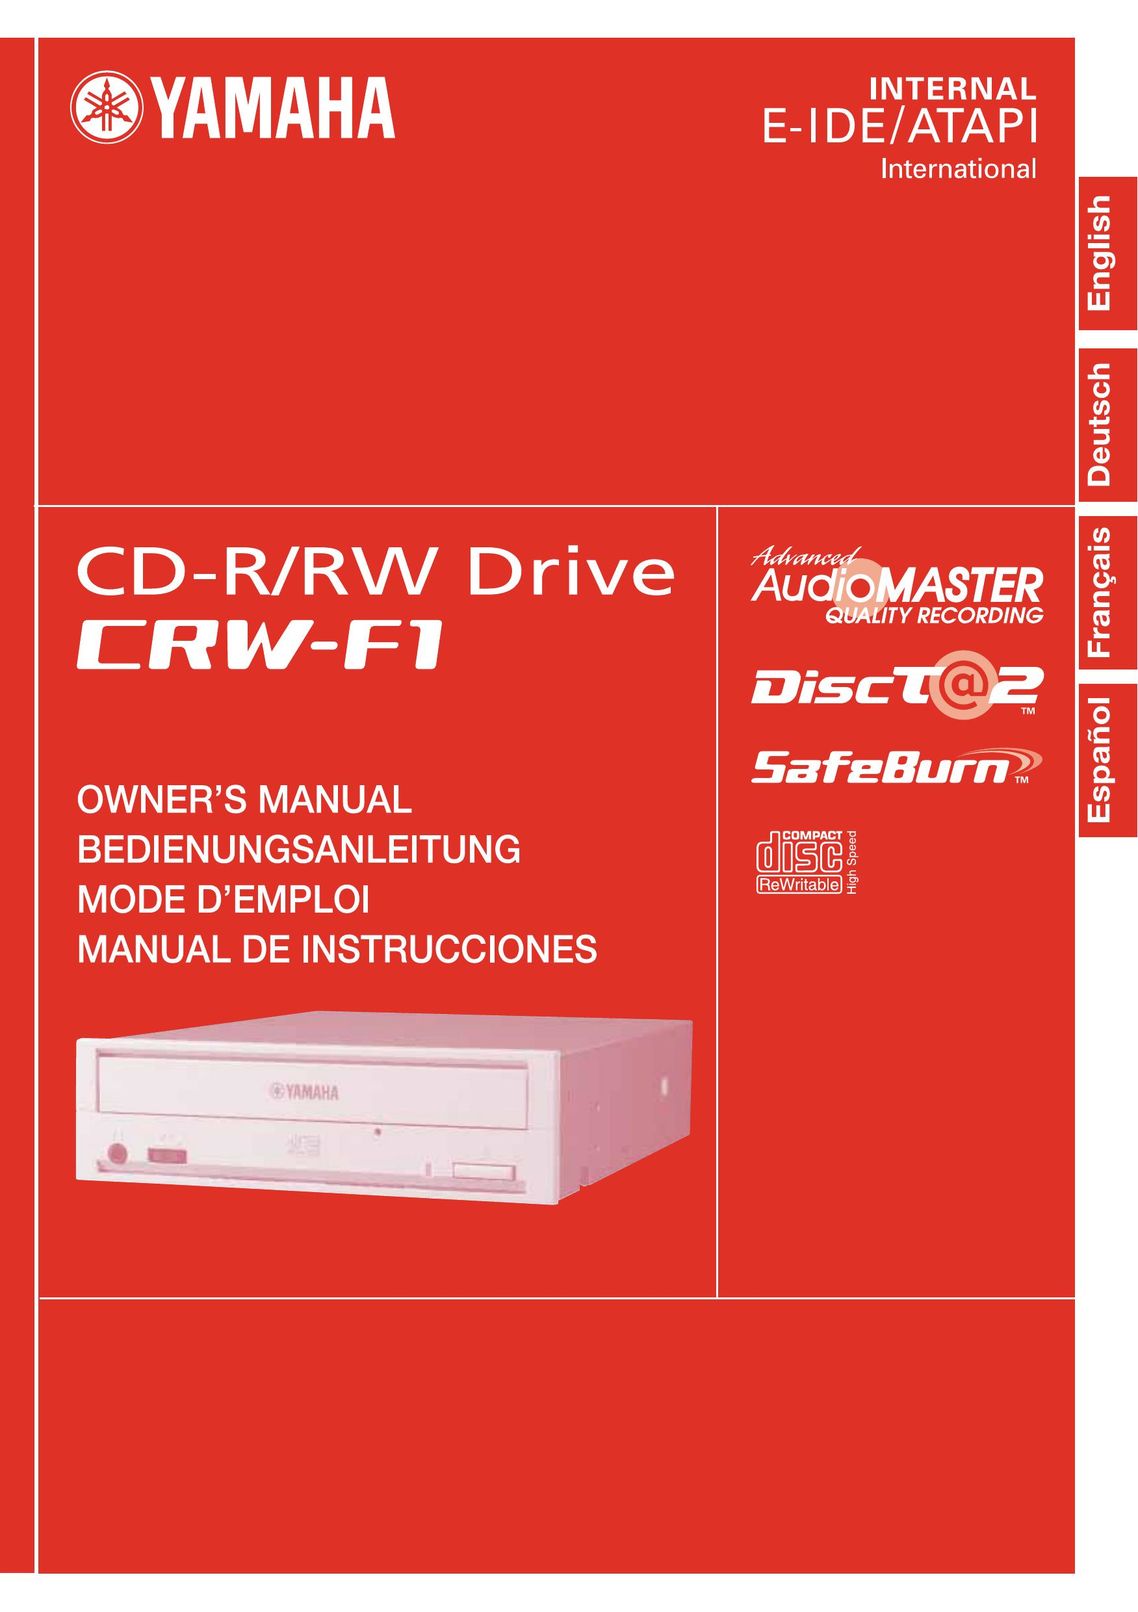 Yamaha CRW-F1 CD Player User Manual